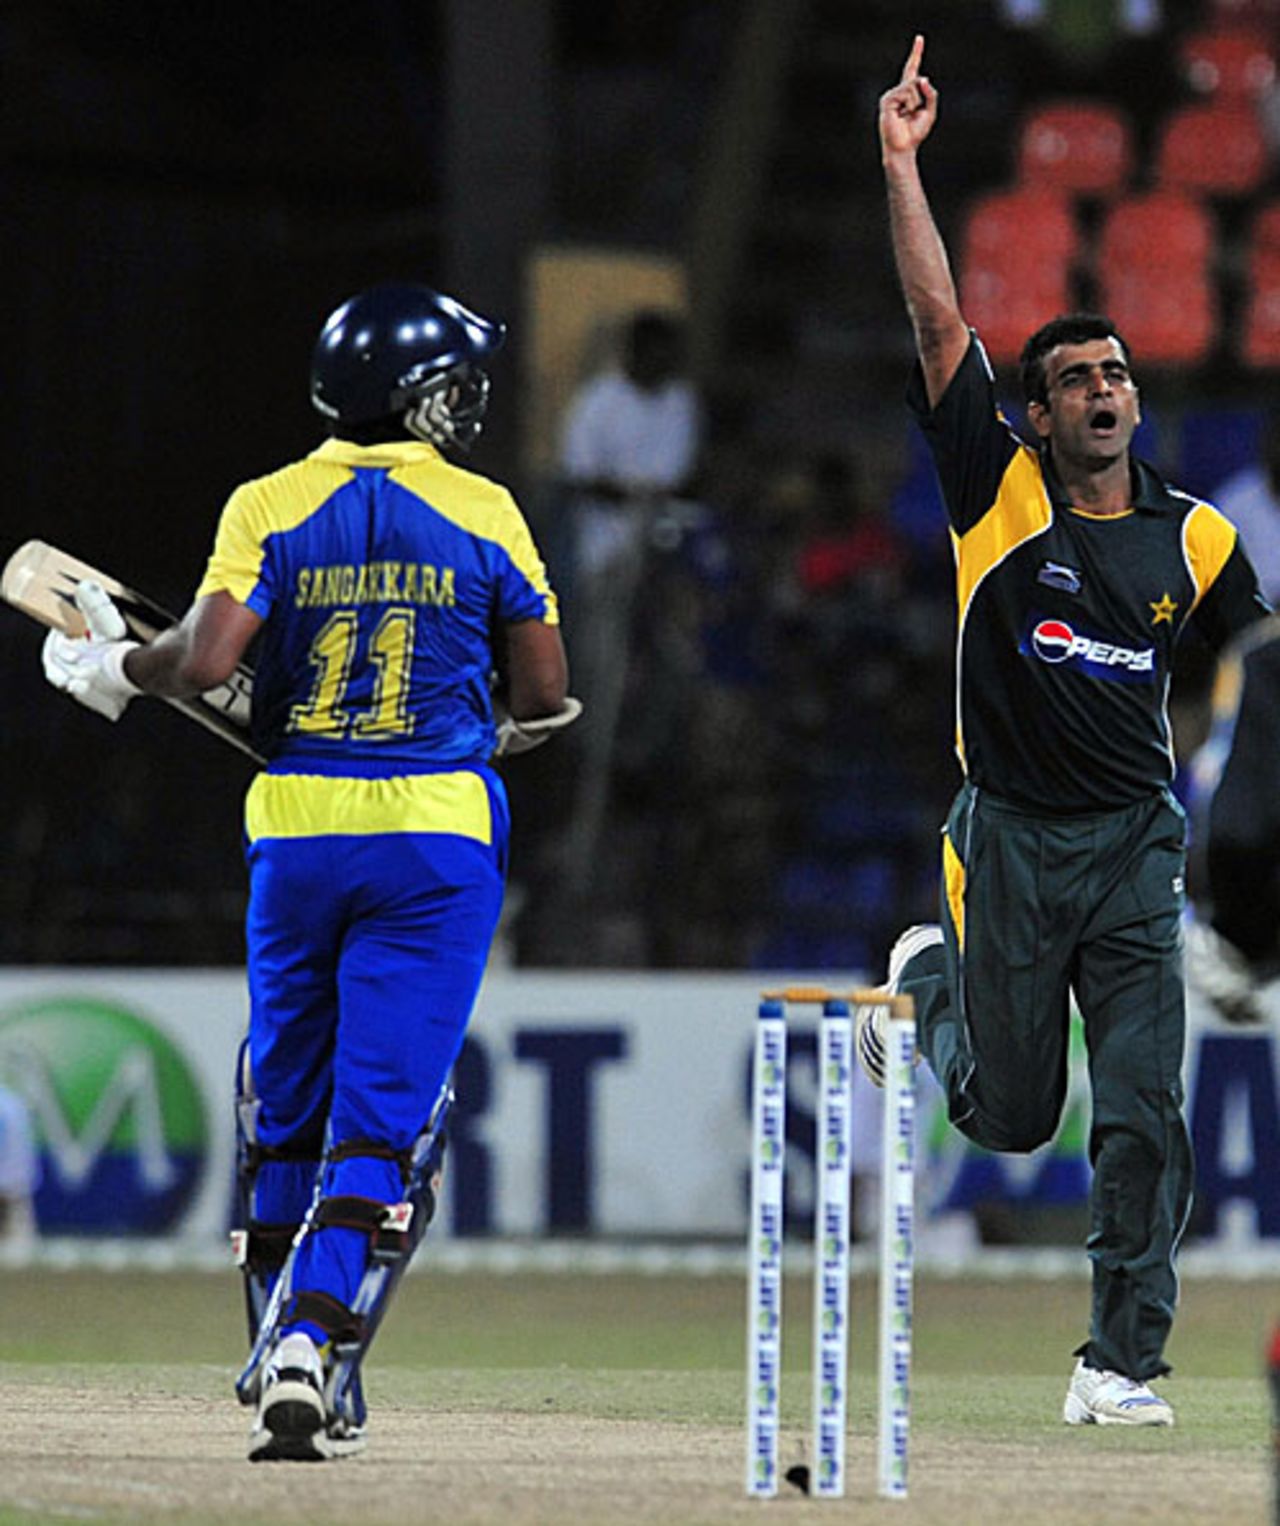 Iftikhar Anjum sent back Kumar Sangakkara, Sri Lanka v Pakistan, 4th ODI, R Premadasa Stadium, Colombo, August 7, 2009 